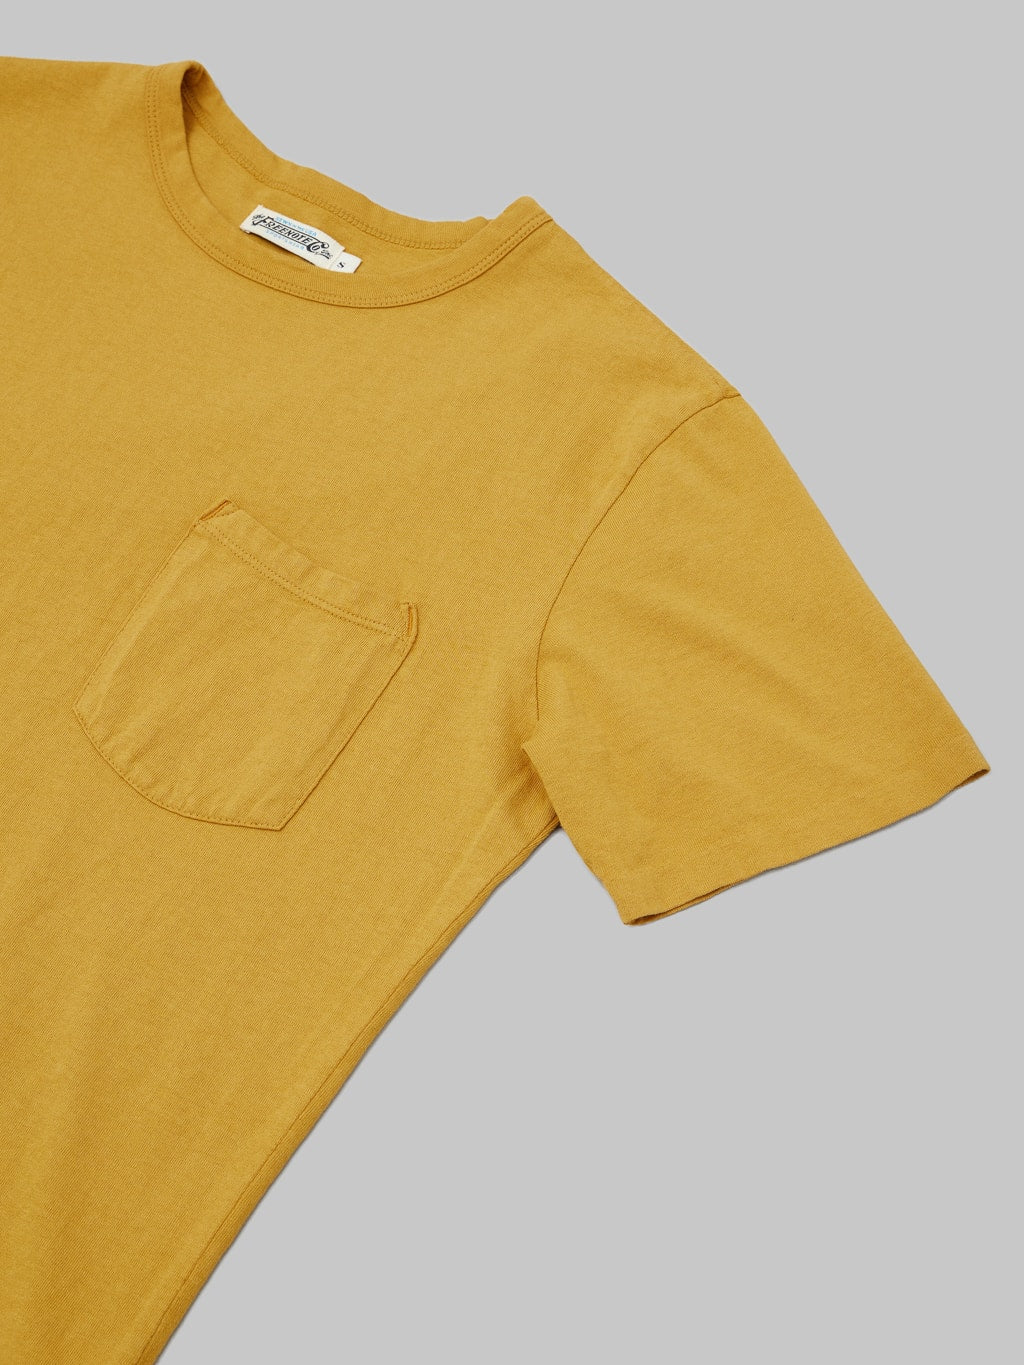 freenote cloth 9 ounce pocket t shirt mustard heavyweight front details